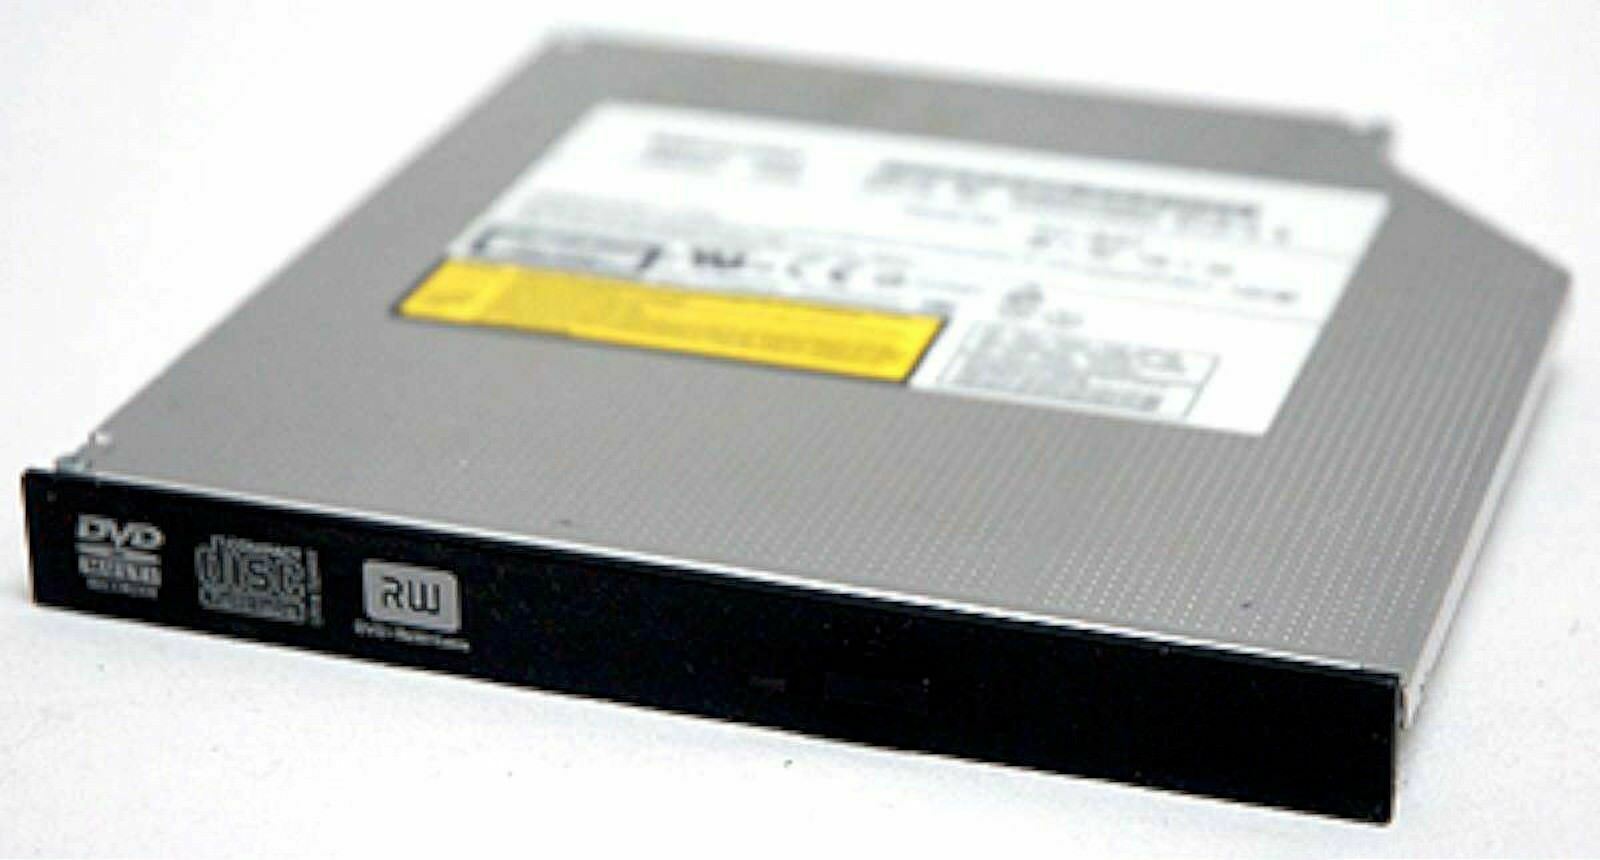 Toshiba Satellite M65 Laptop DVD/RW Combo Drive UJ-840 notebook computer media